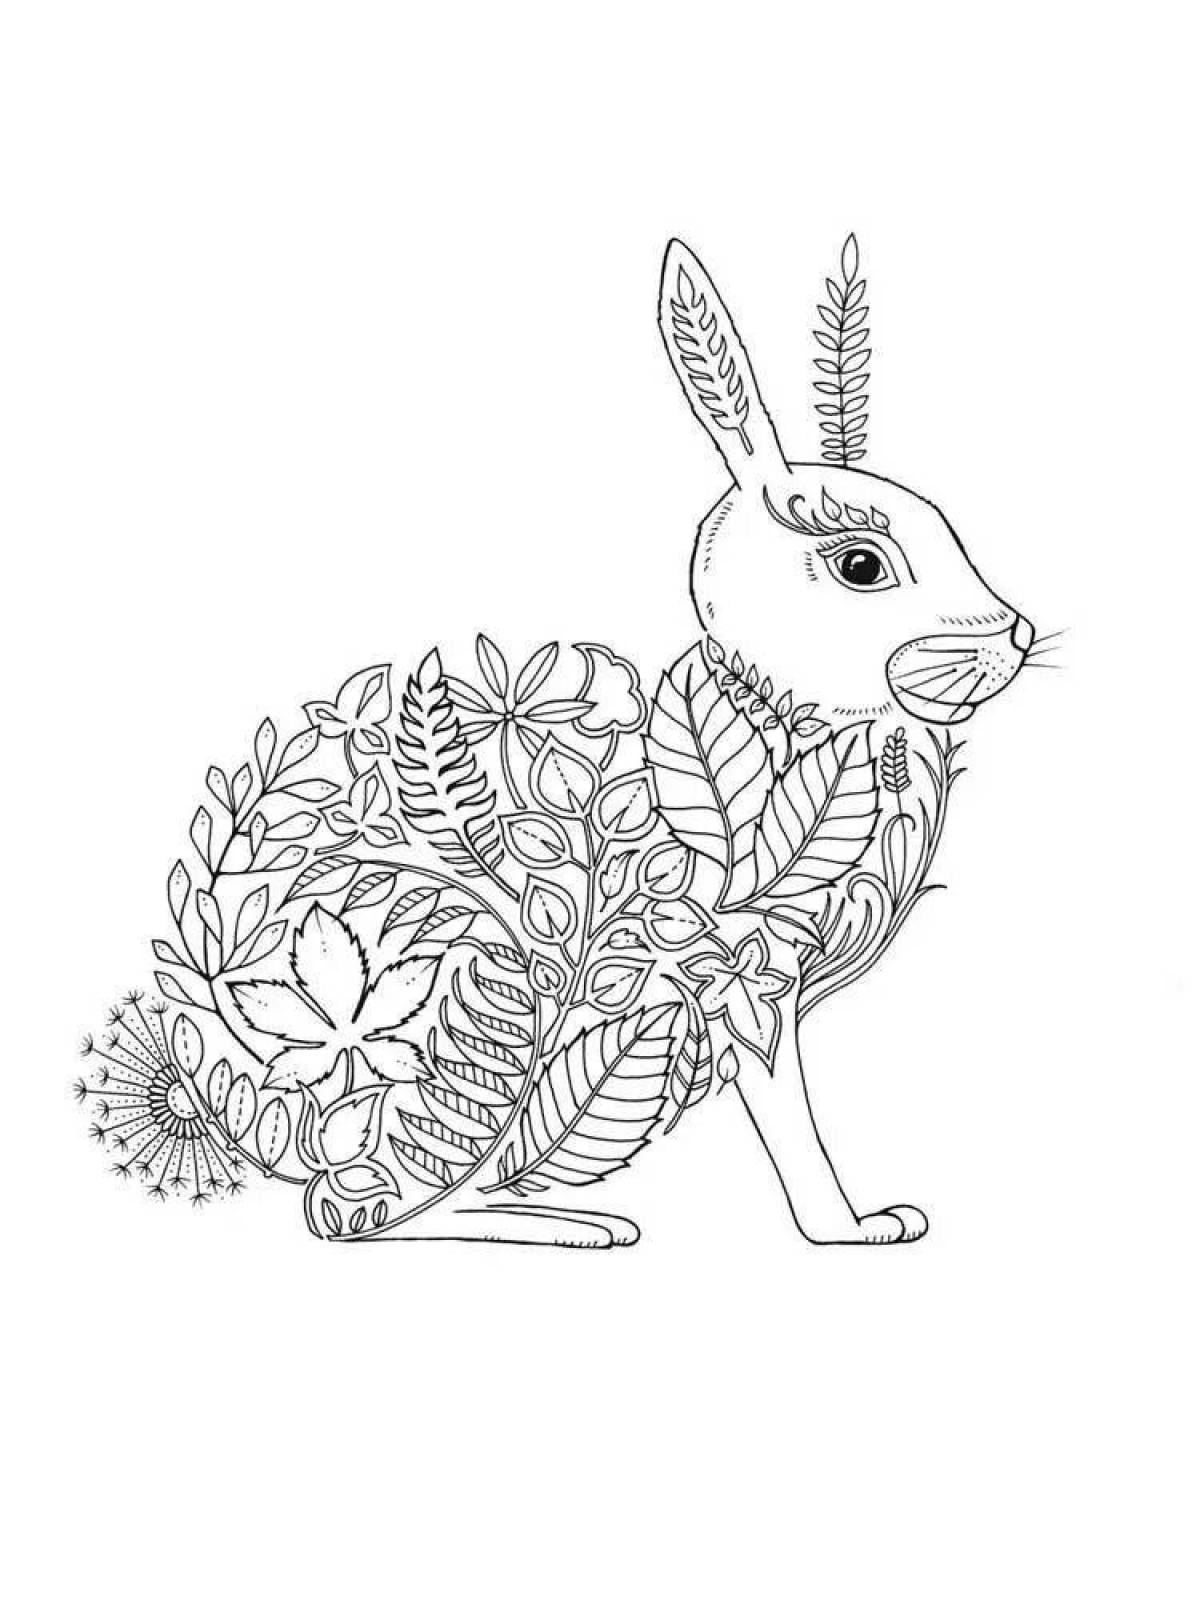 Colouring serene anti-stress hare